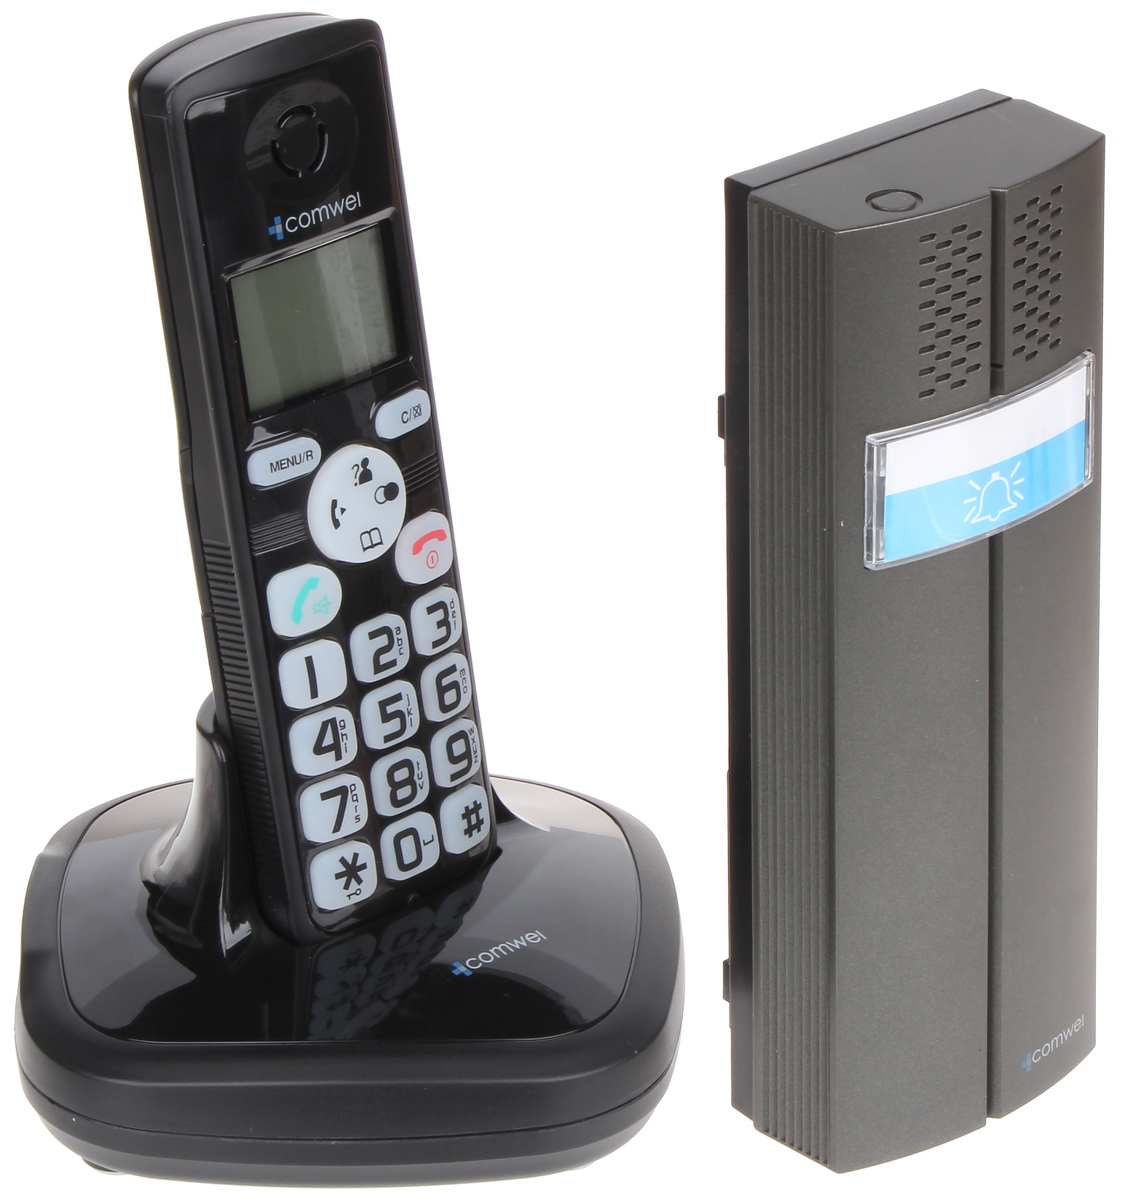 telefonillo de portero automatico inalámbrico – Compra telefonillo de portero  automatico inalámbrico con envío gratis en AliExpress version